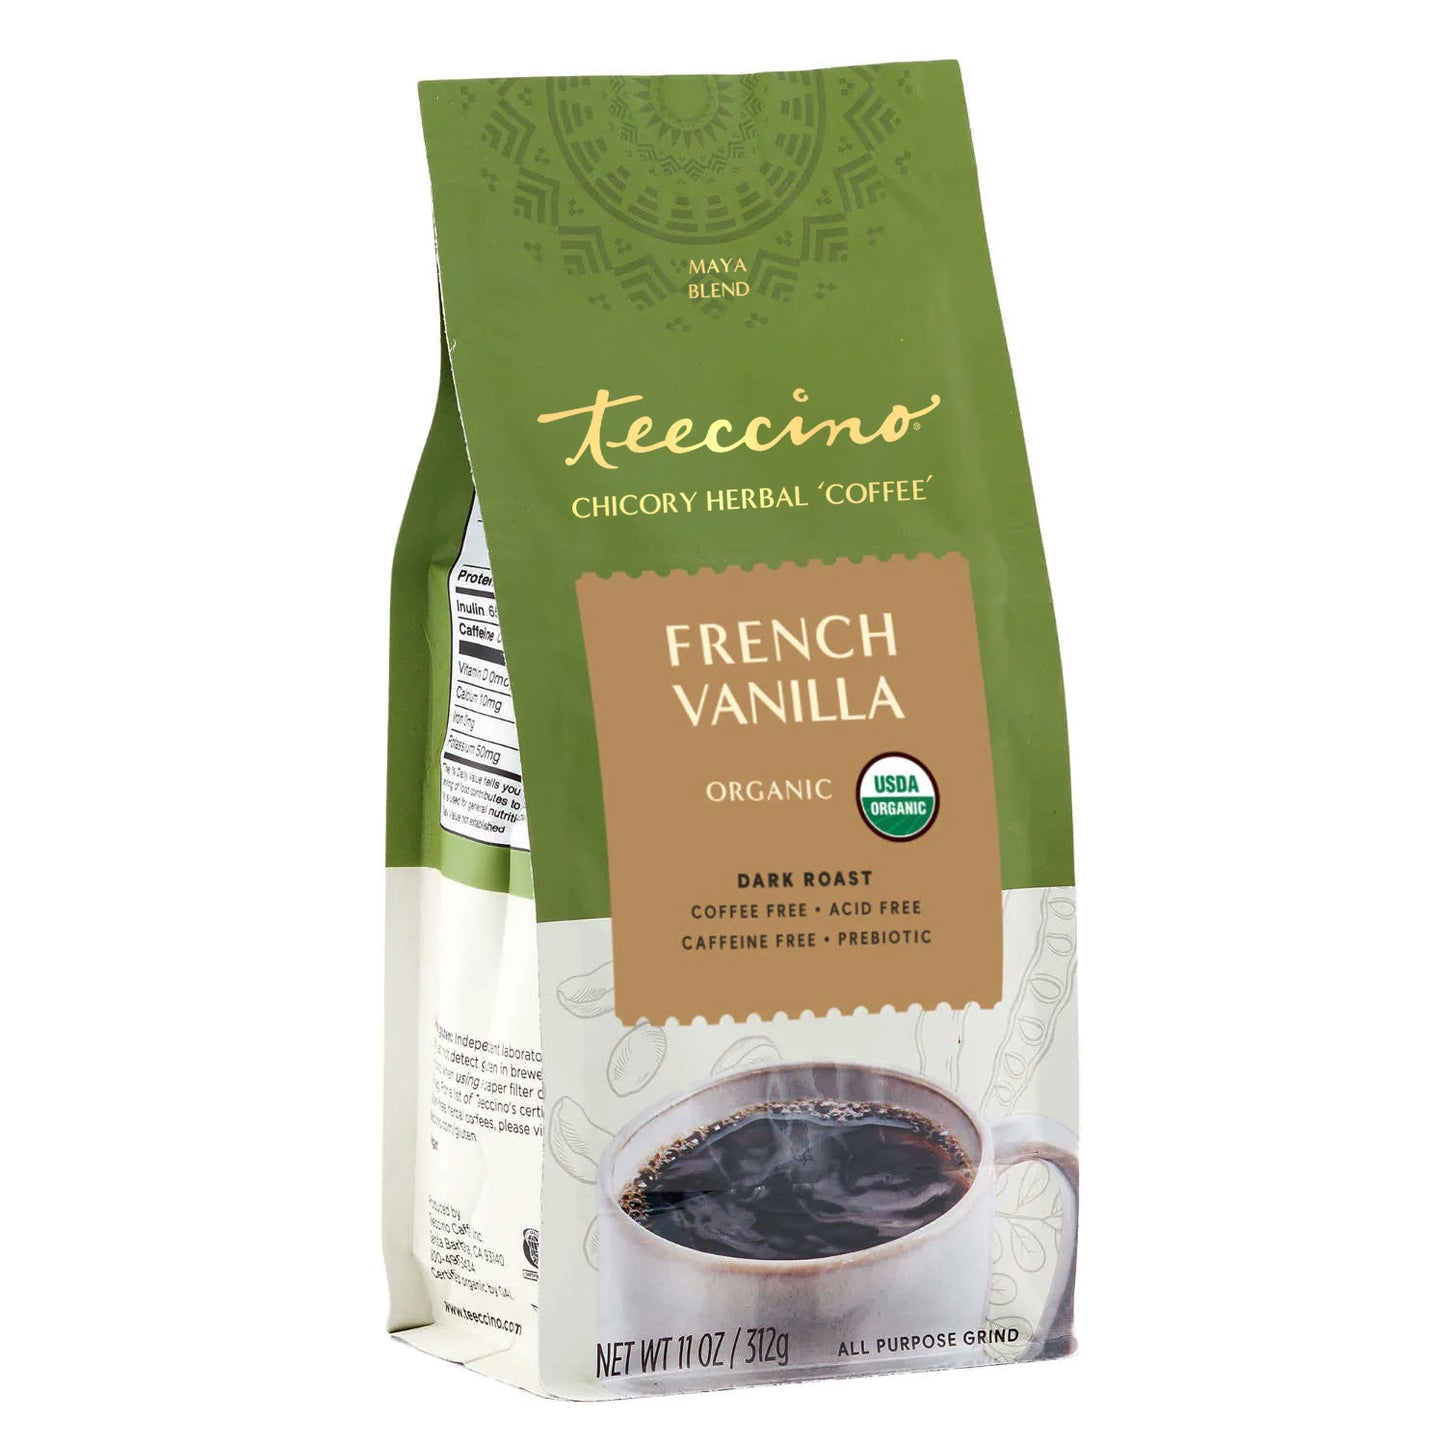 French Vanilla Chicory Herbal Coffee